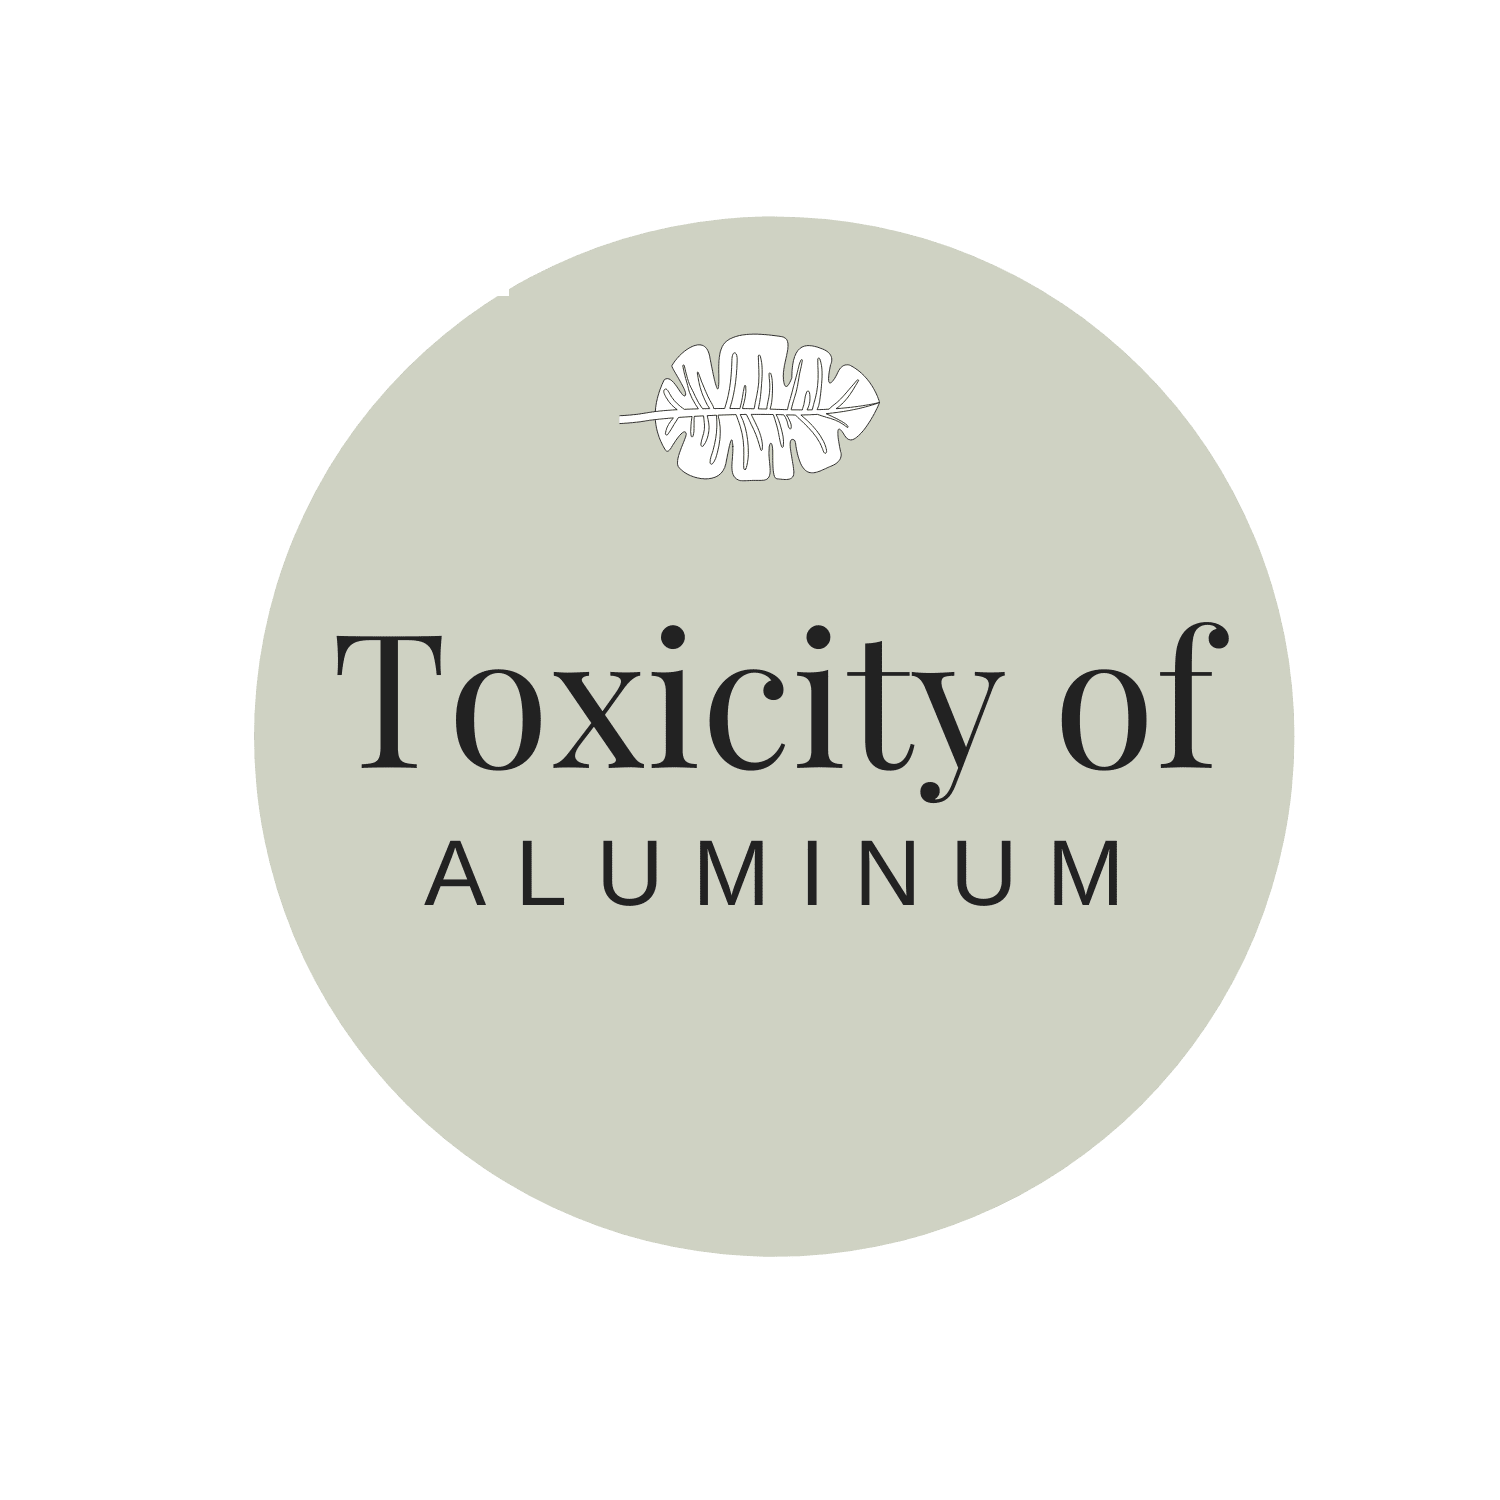 Toxicity of Aluminum